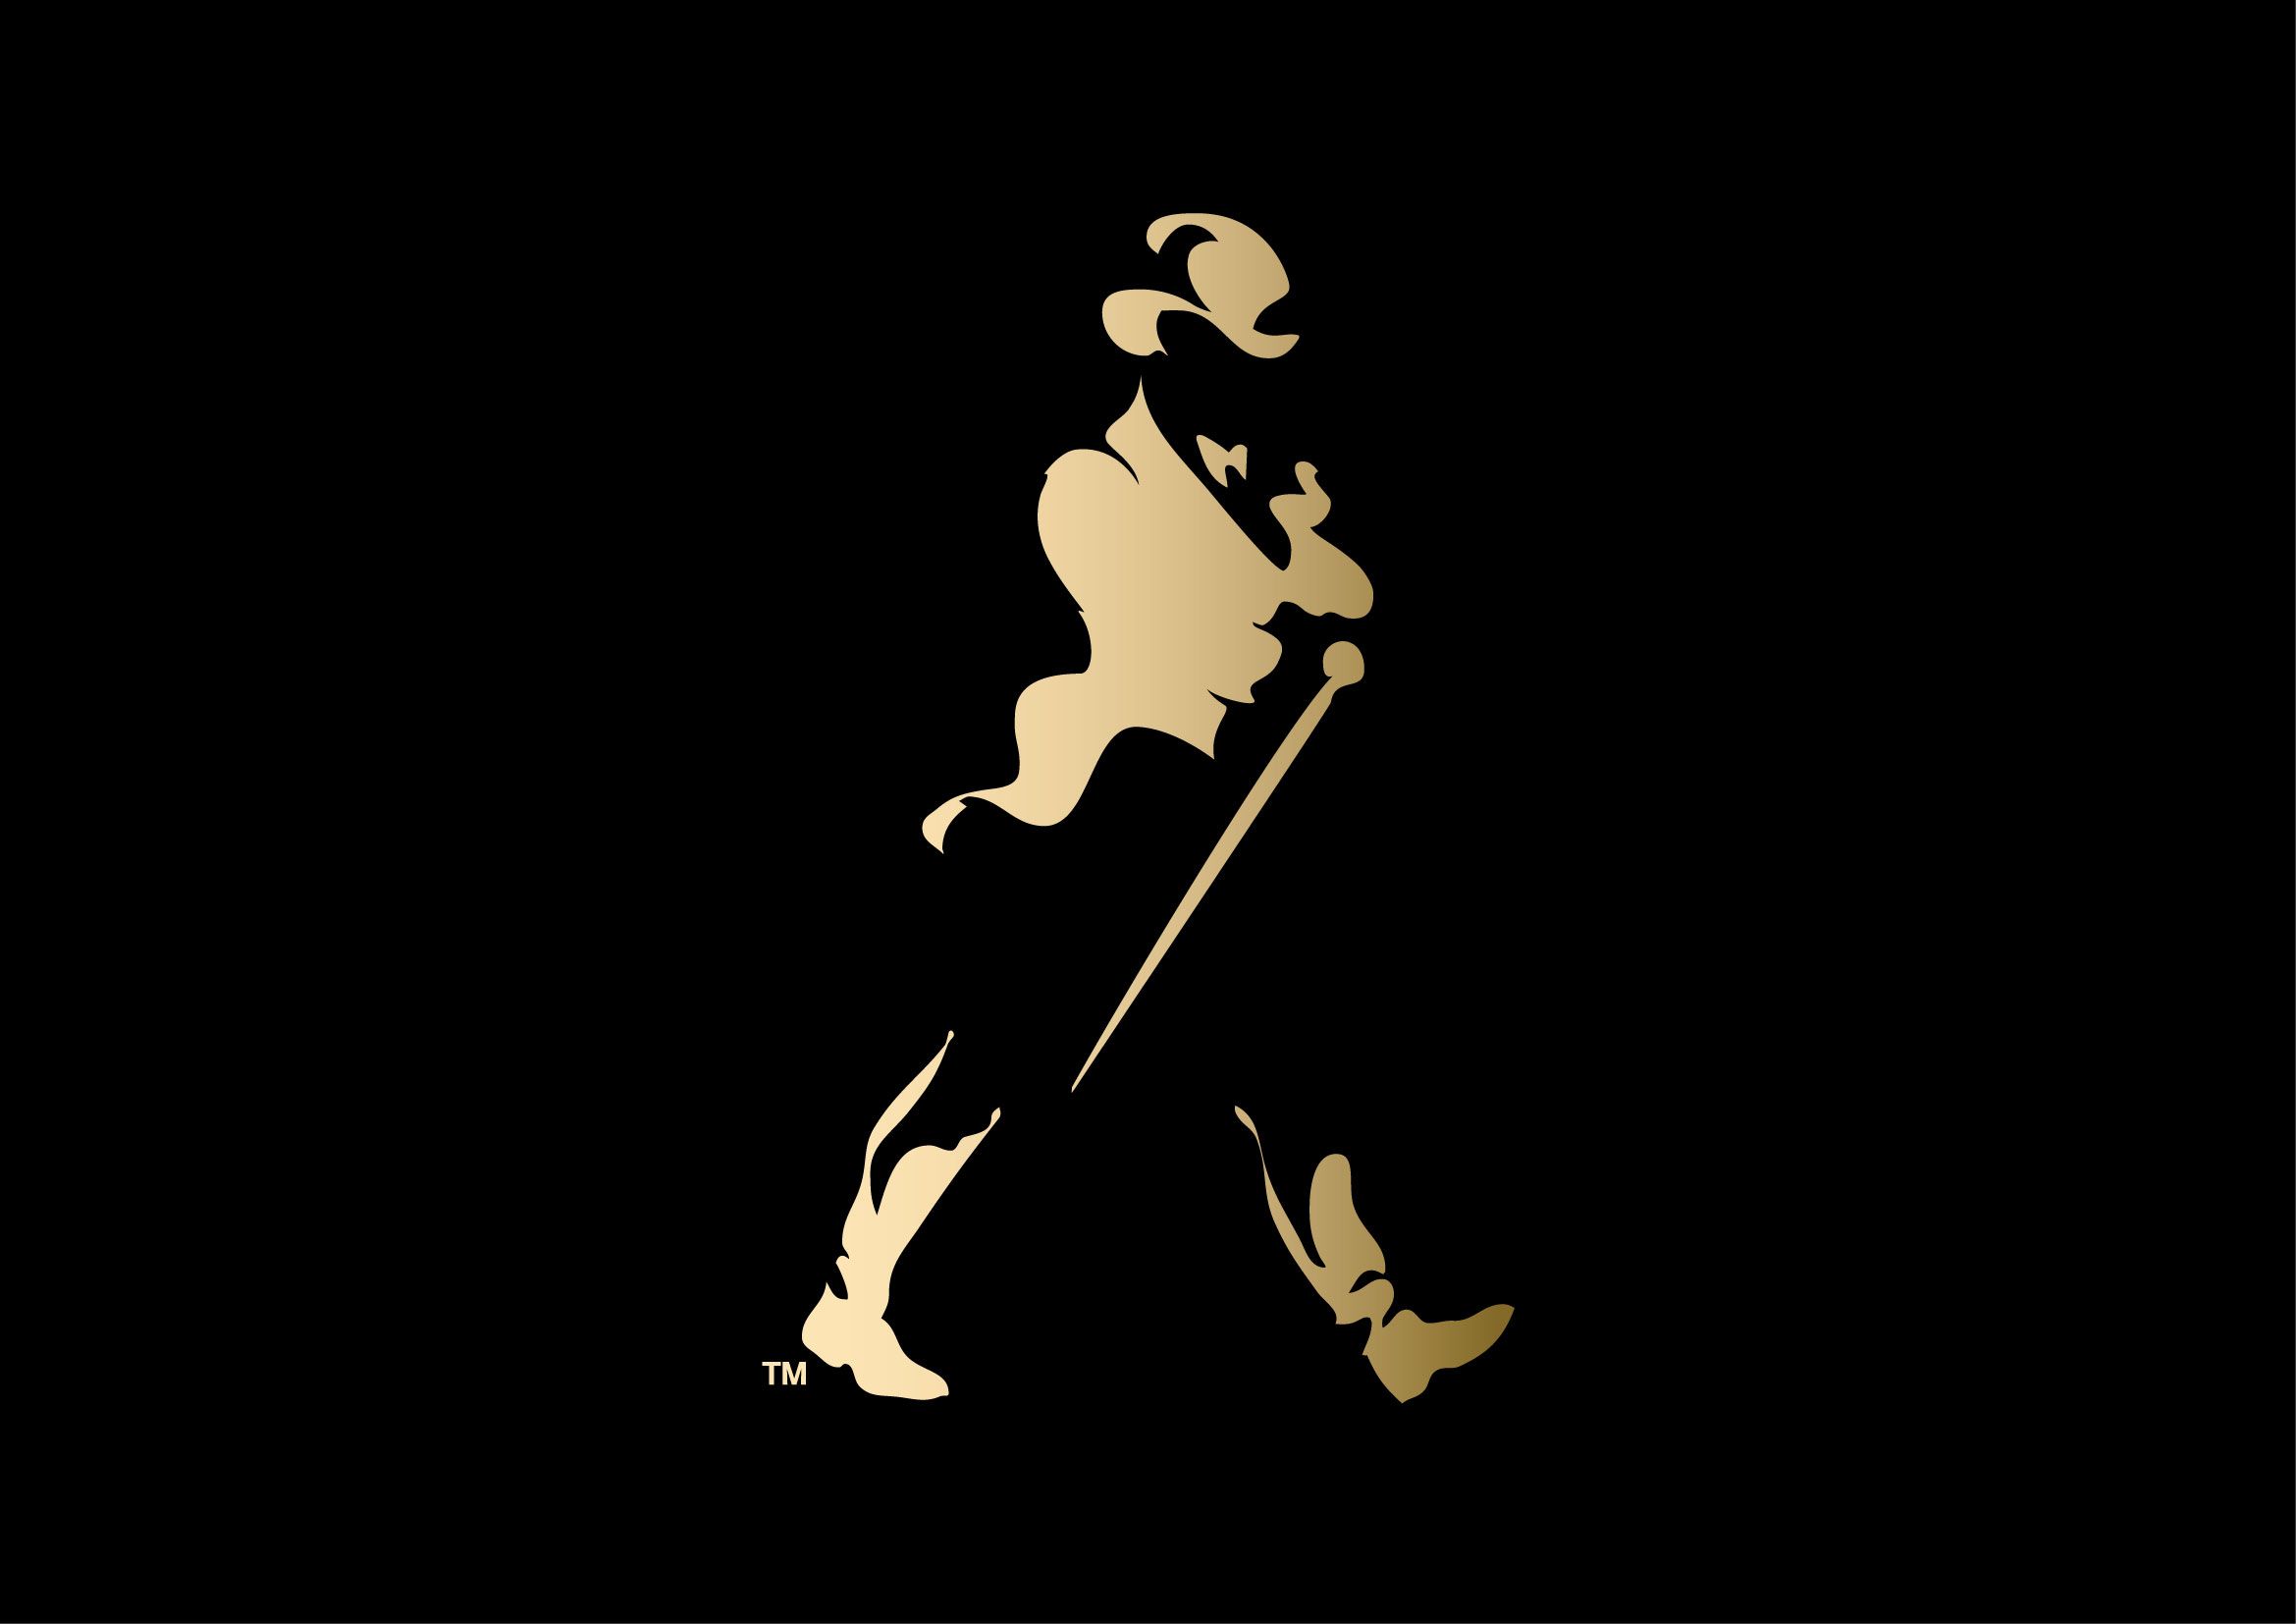 Johnnie Walker, Striding Man Logo Wallpaper. Walker wallpaper, Johnnie walker, Johnnie walker logo